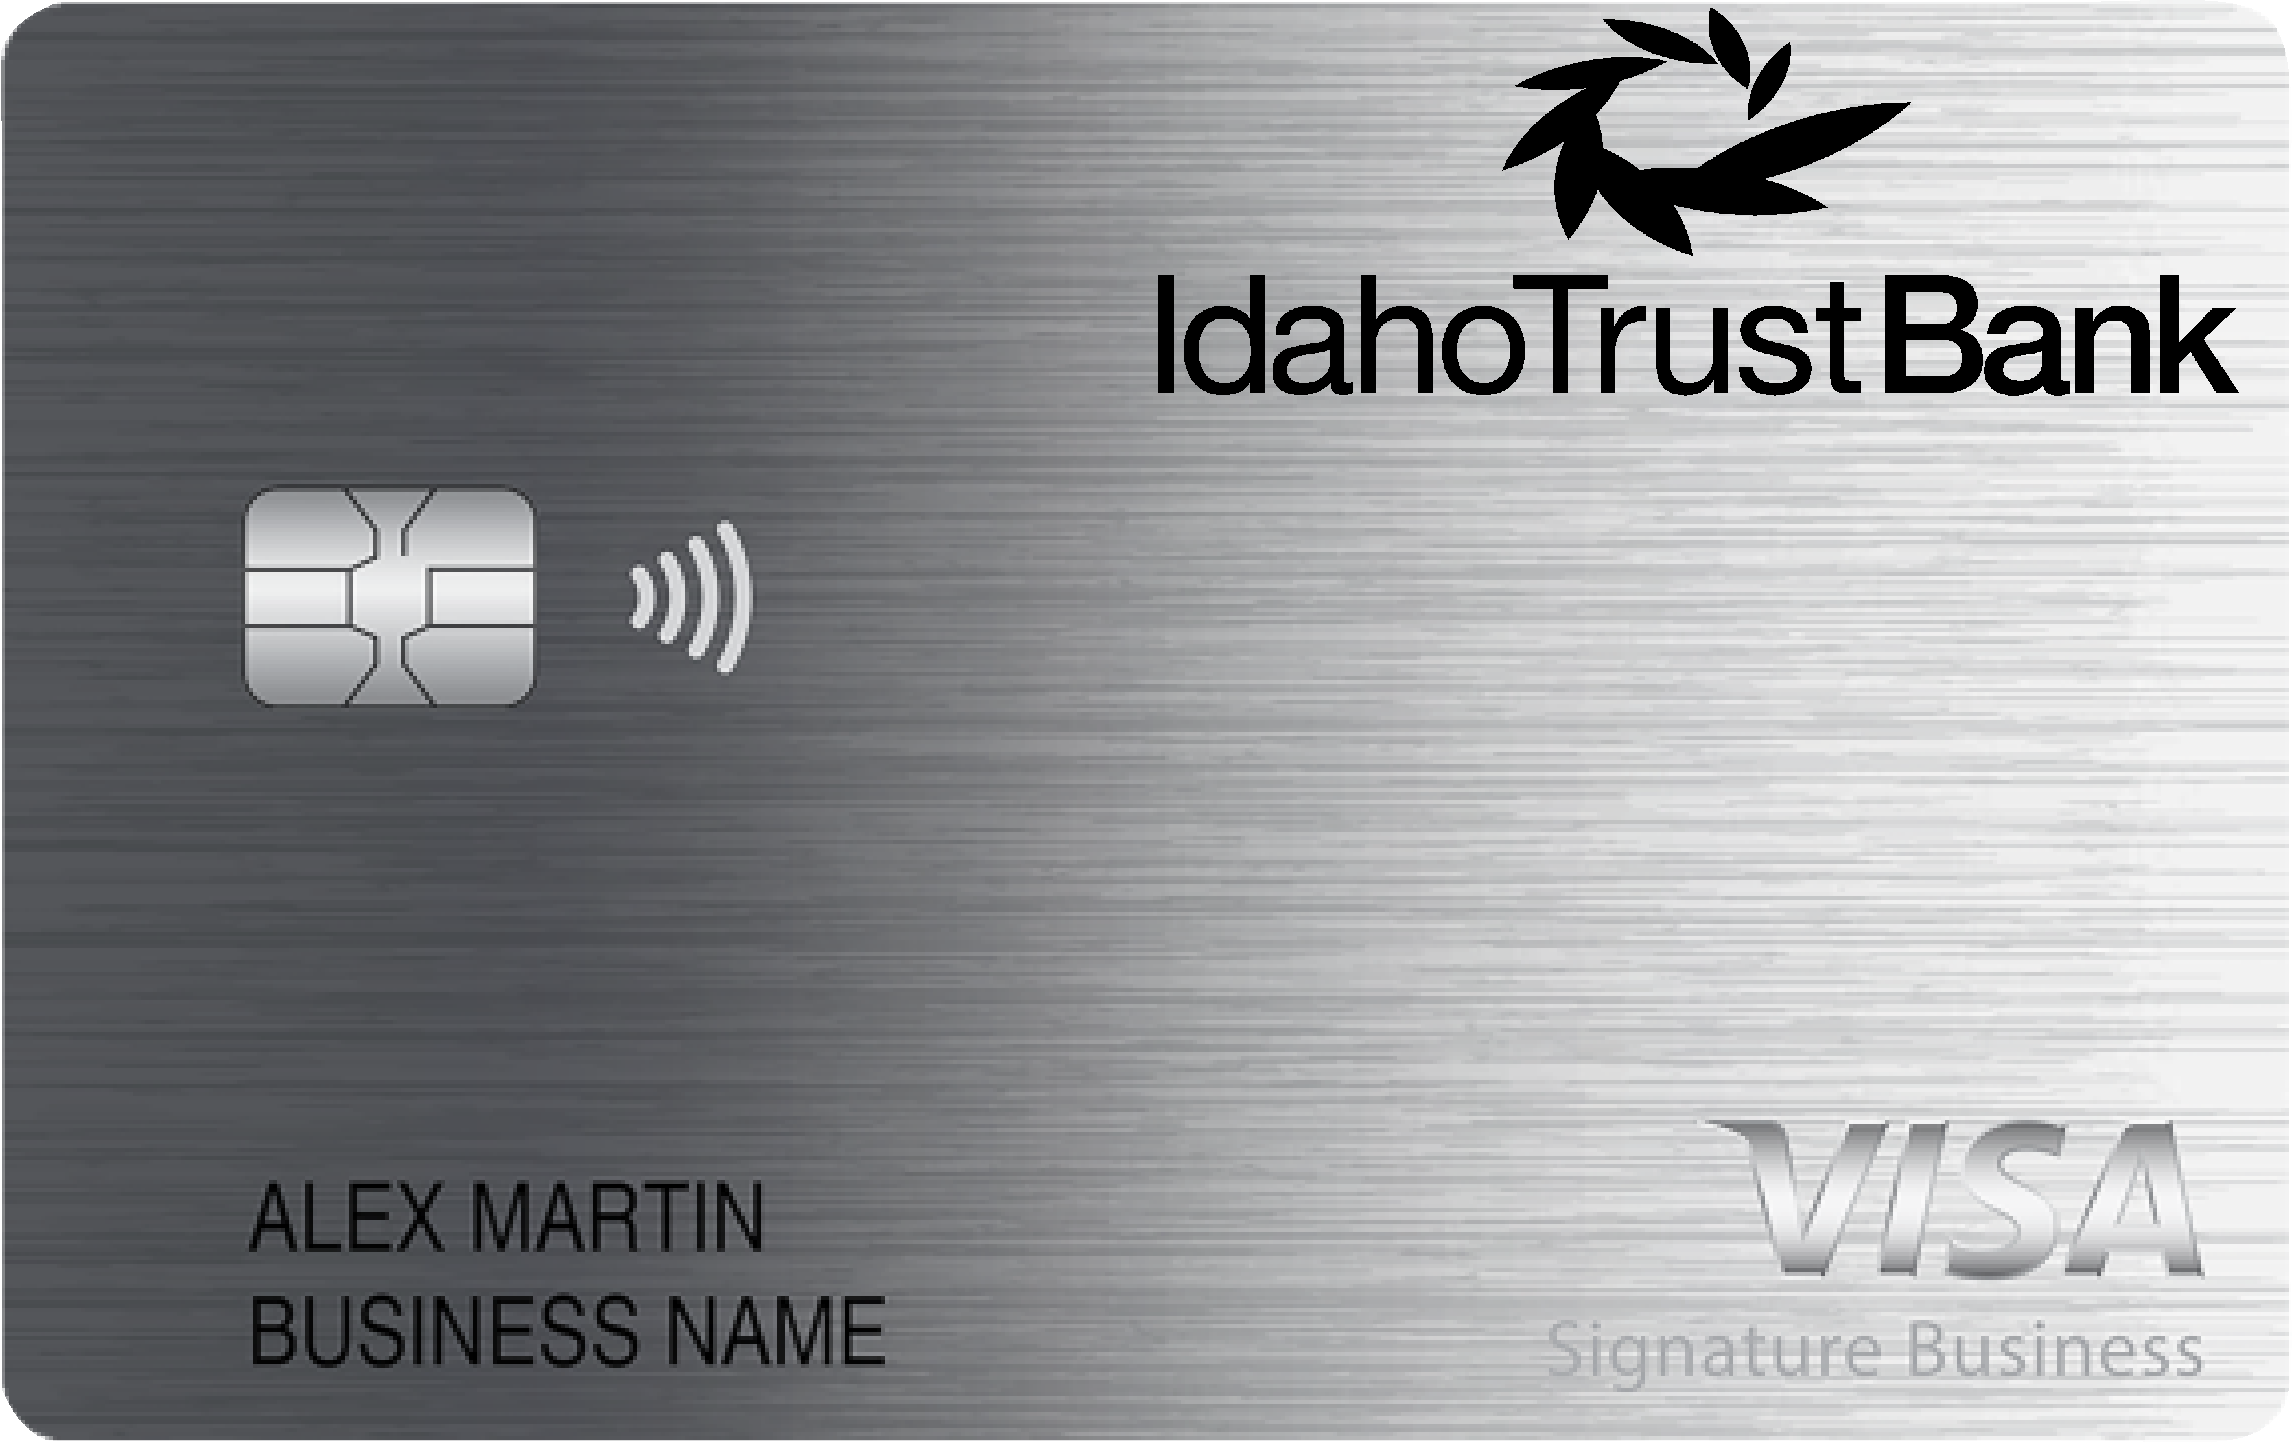 Idaho Trust Bank Smart Business Rewards Card